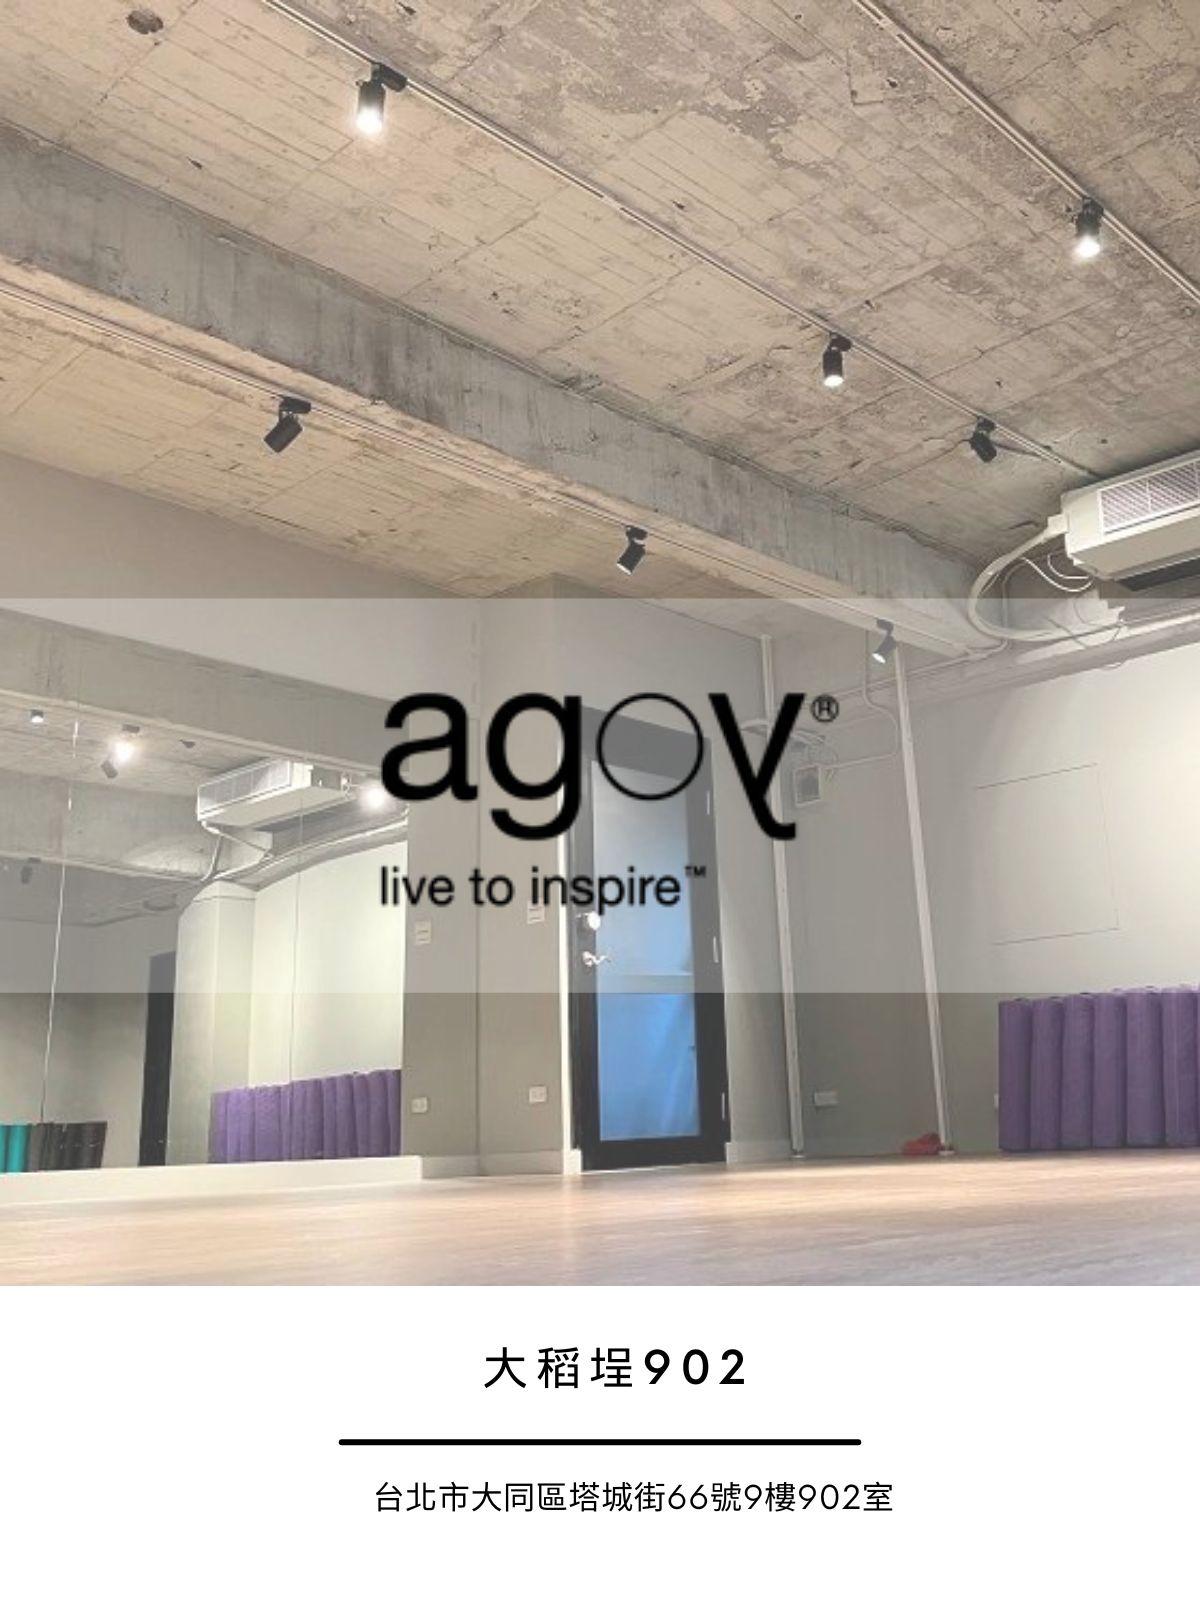 agoy 大稻埕 902 - 2小時方案 - agoy共享空間